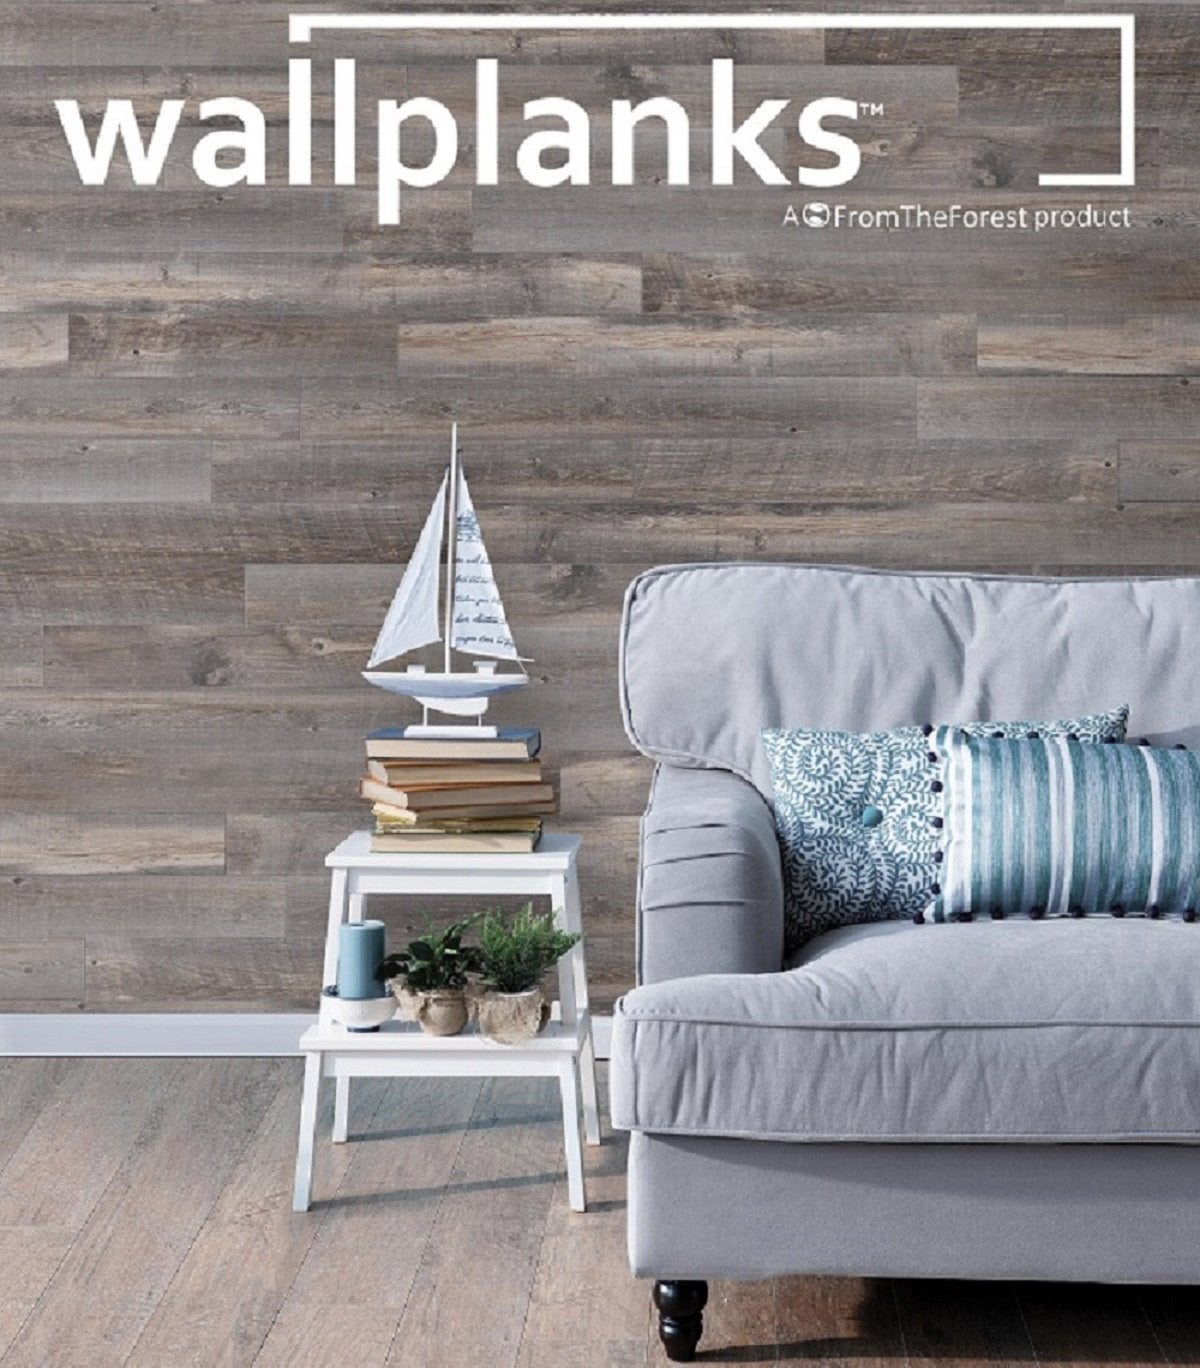 Wallplanks